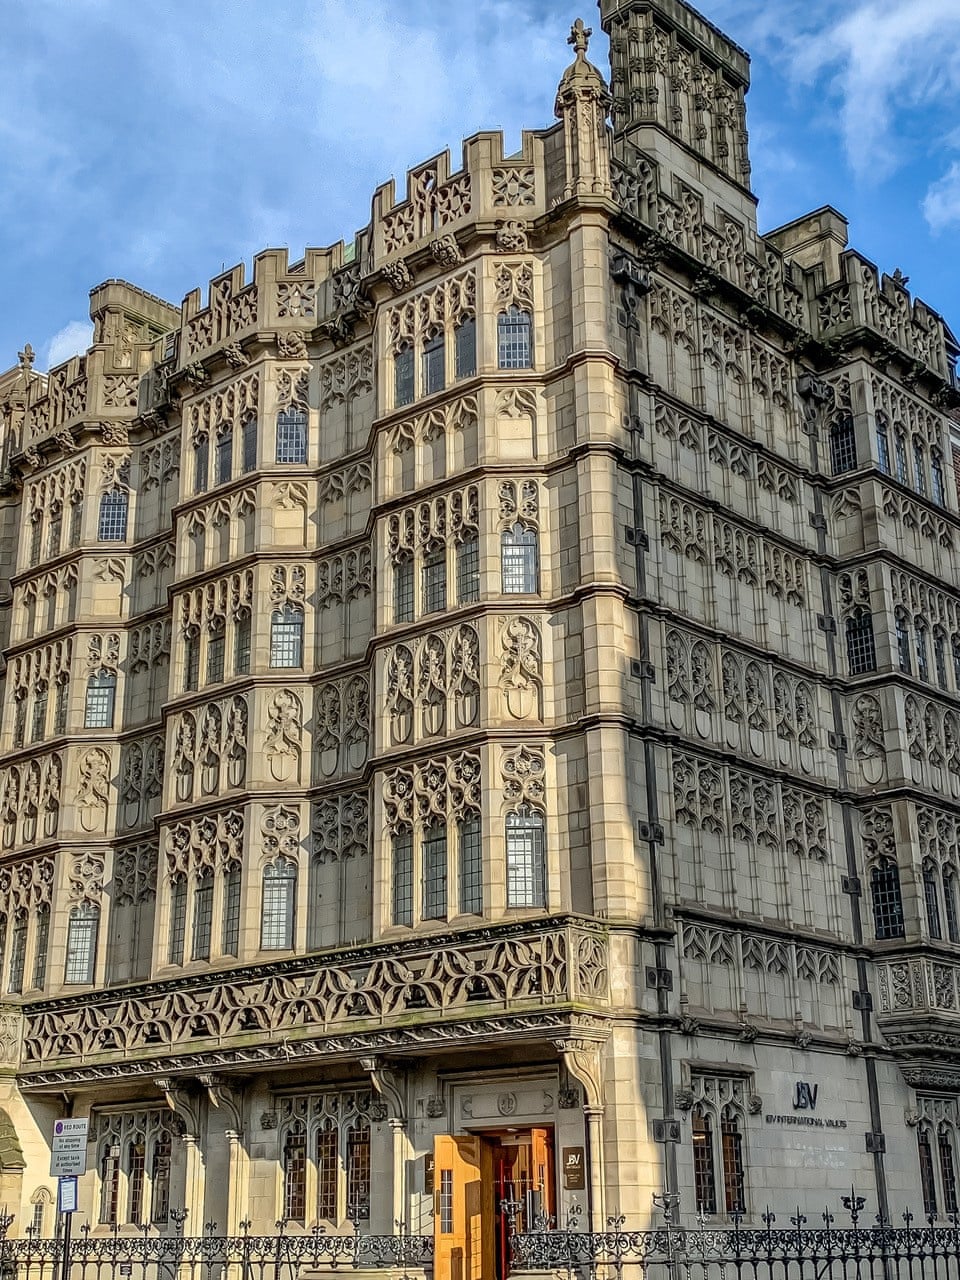 International Bank Vaults mansion, Park Lane, London, 2019.